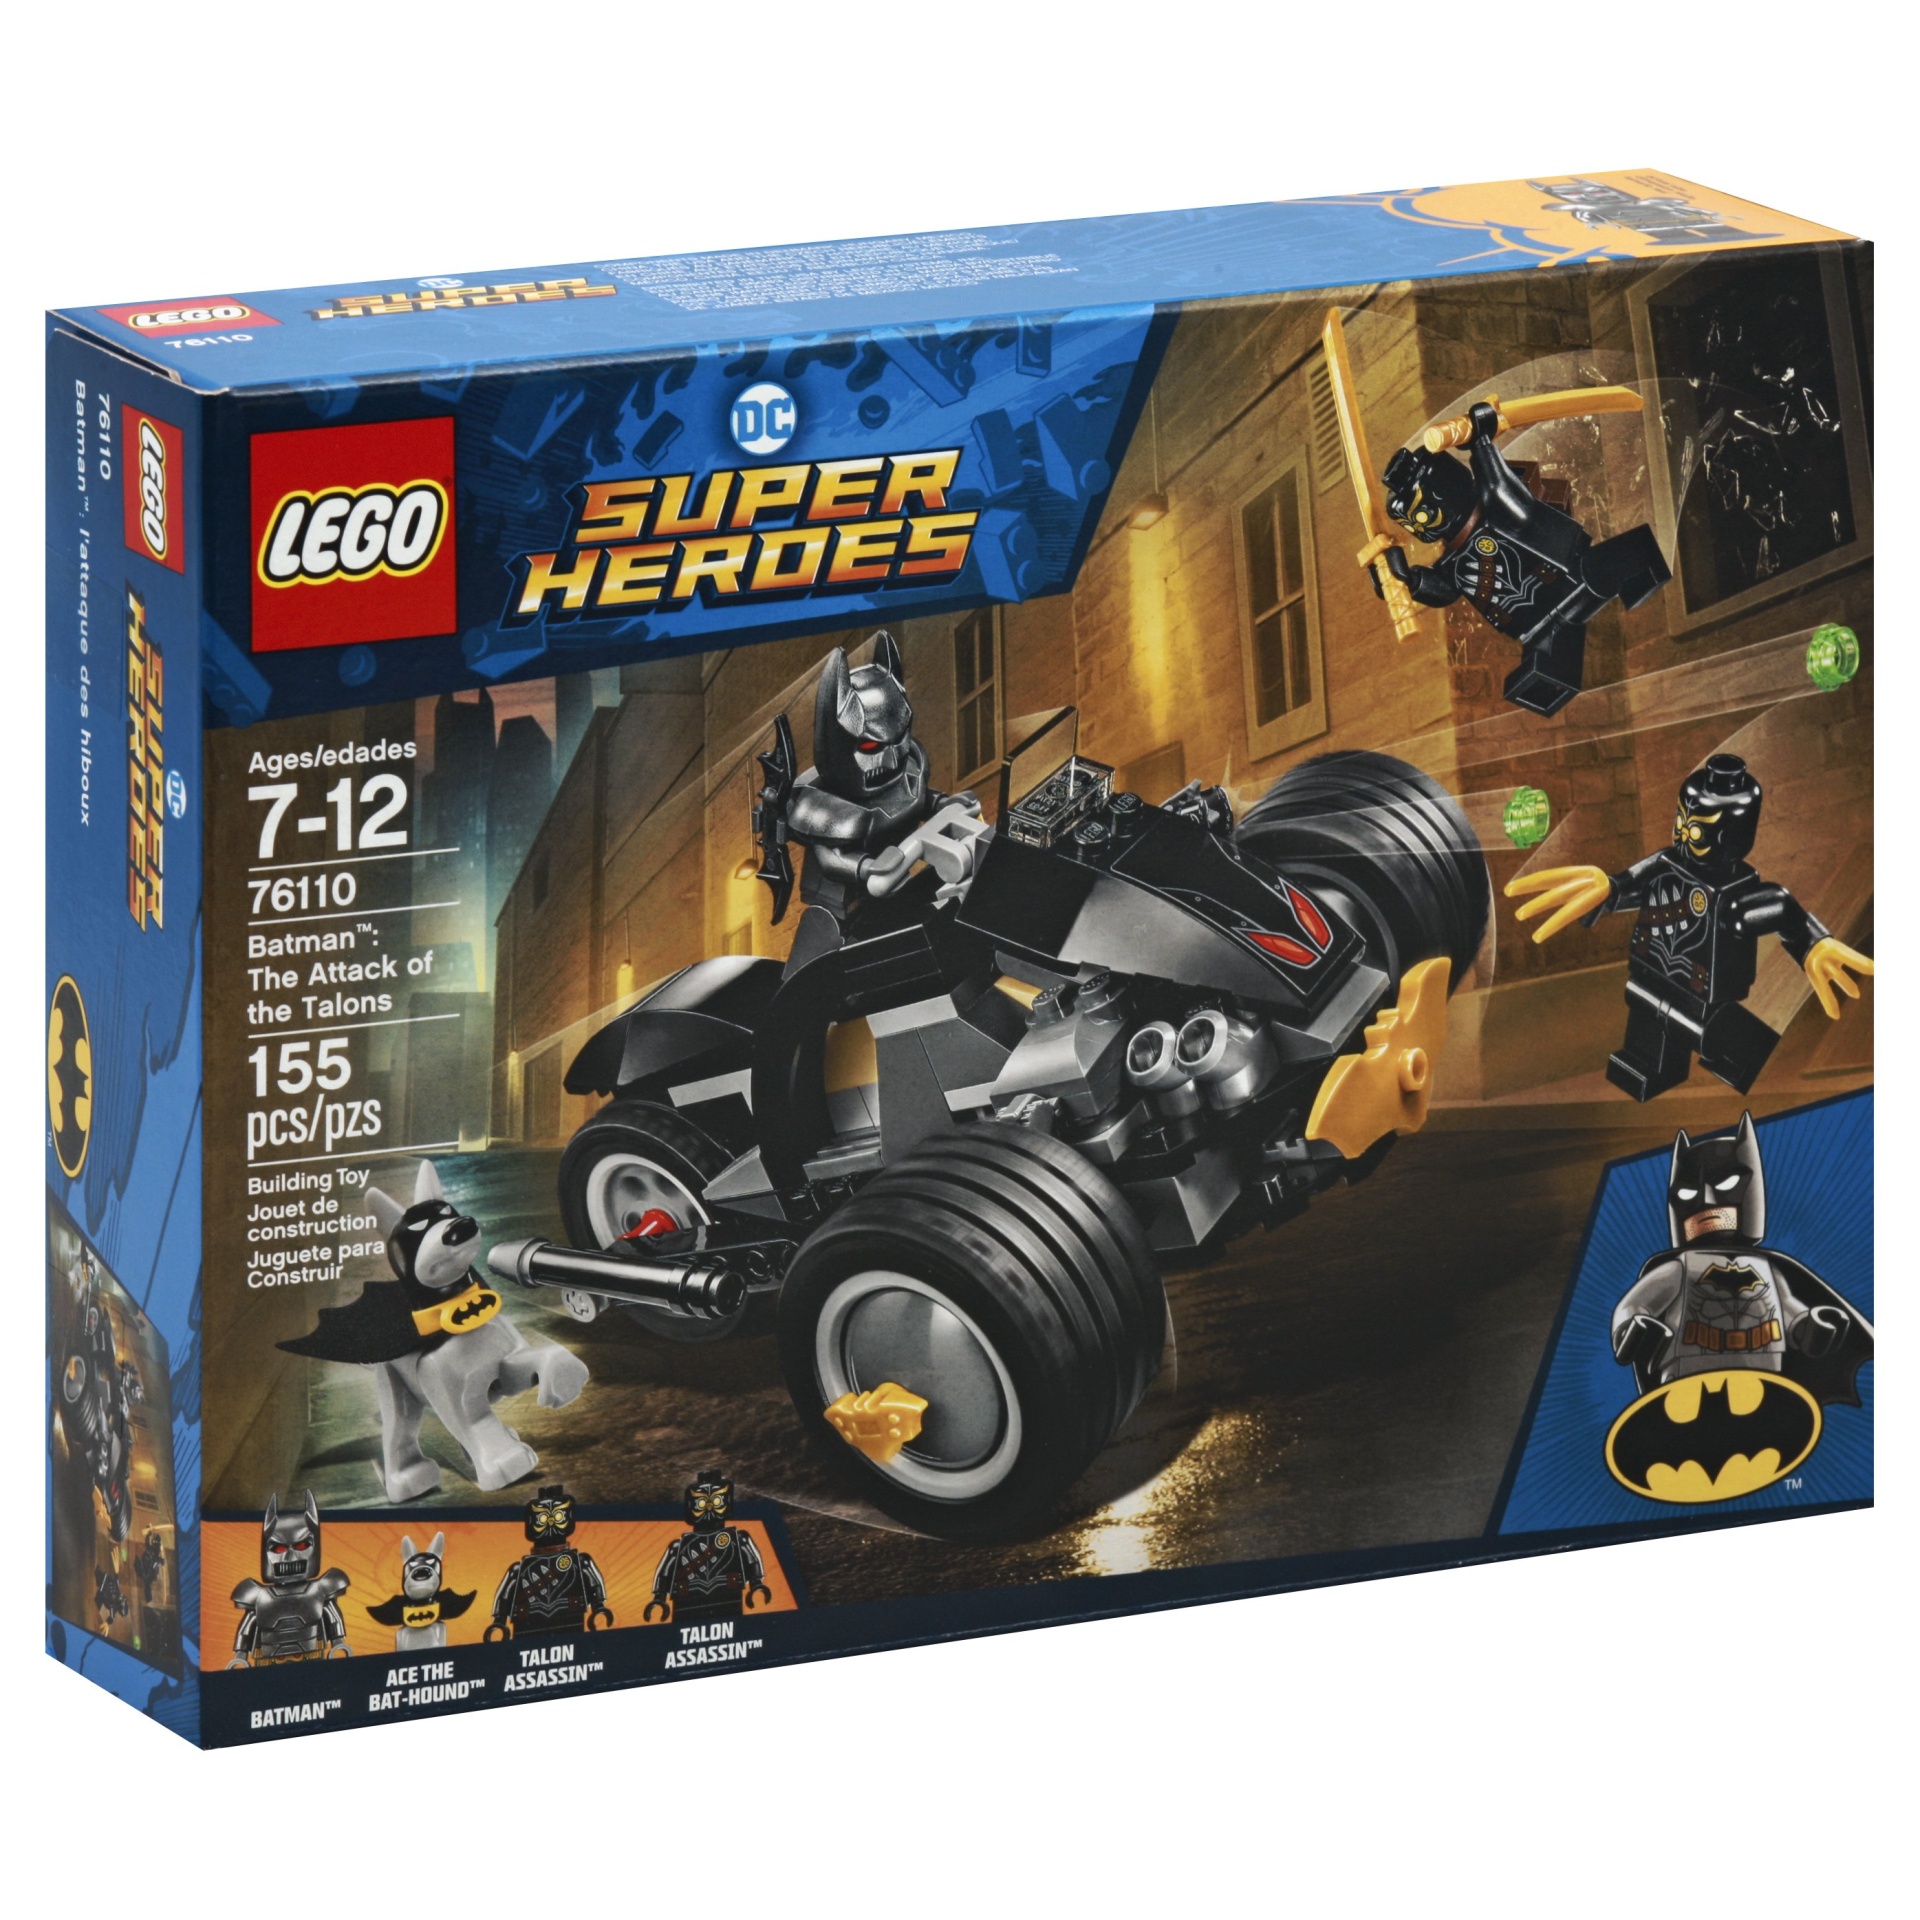 slide 1 of 8, LEGO Super Heroes DC Comics Batman: The Attack of the Talons 76110, 1 ct